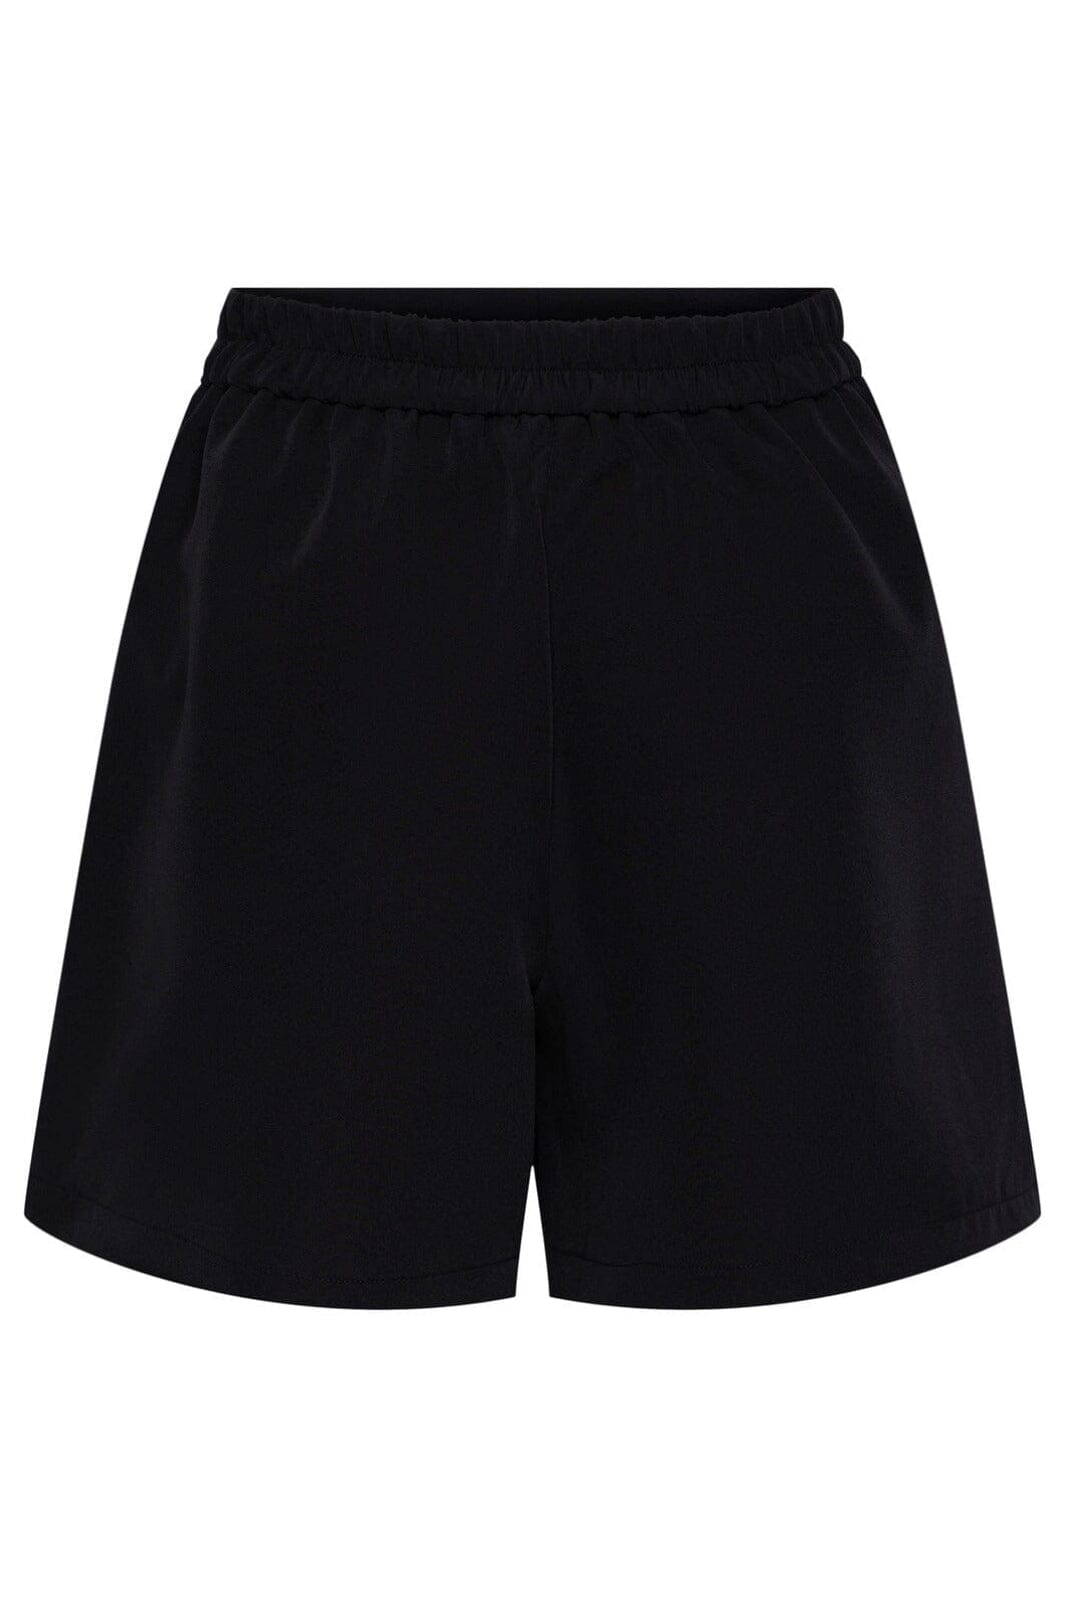 Pieces - Pcbossy Shorts - 4394620 Black Shorts 